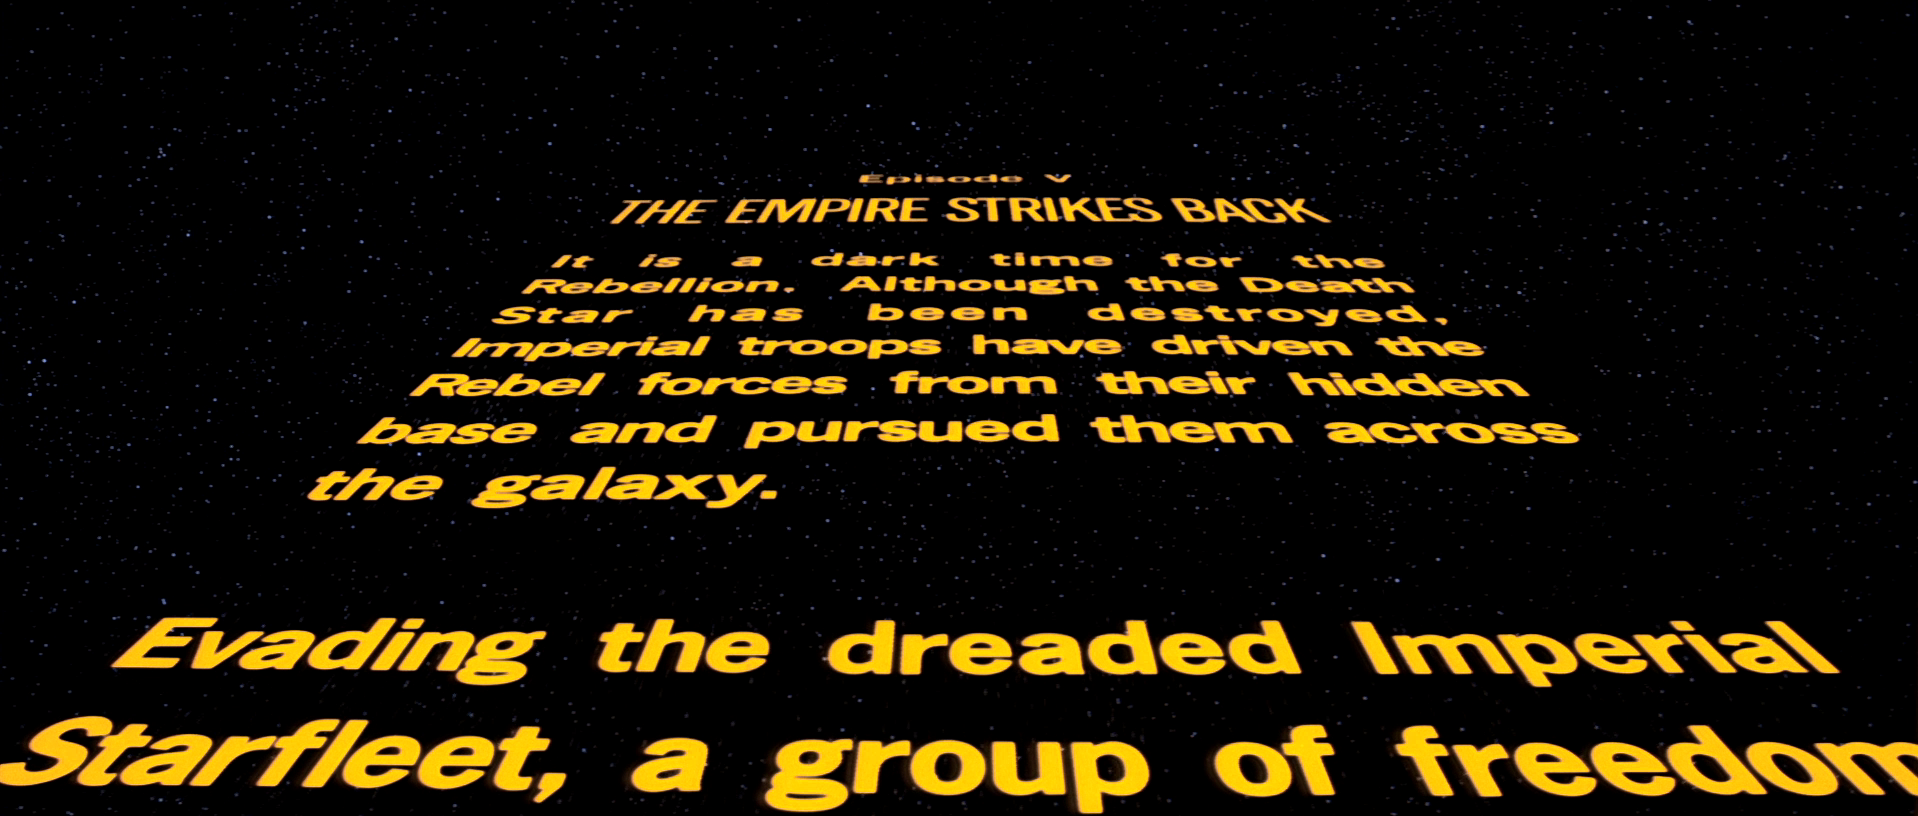 Star wars title font